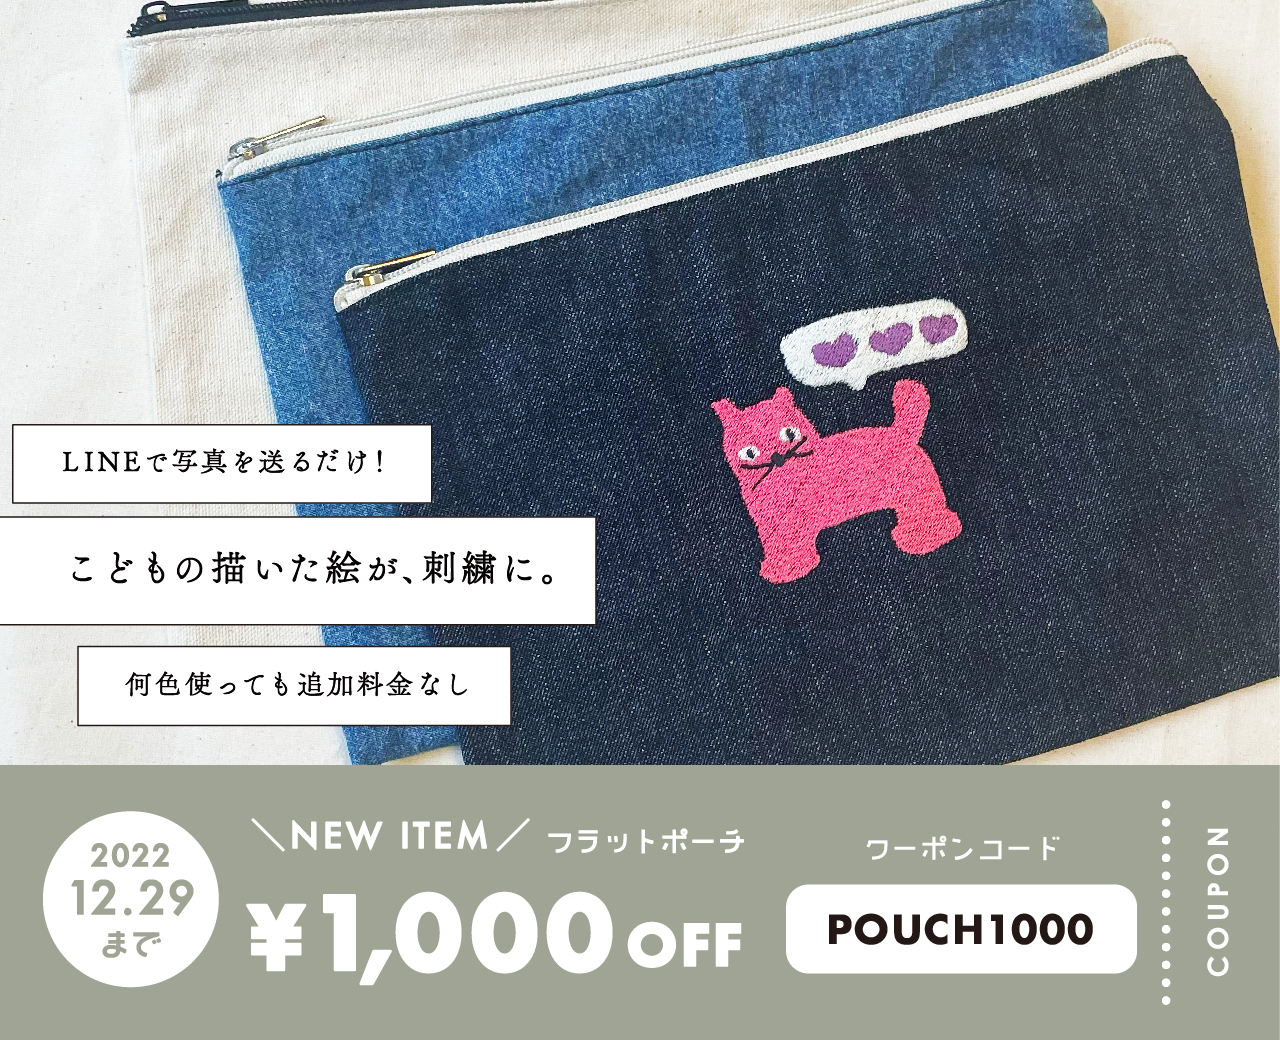 ＼NEW ITEM ポーチ ¥1,000 OFFクーポン／